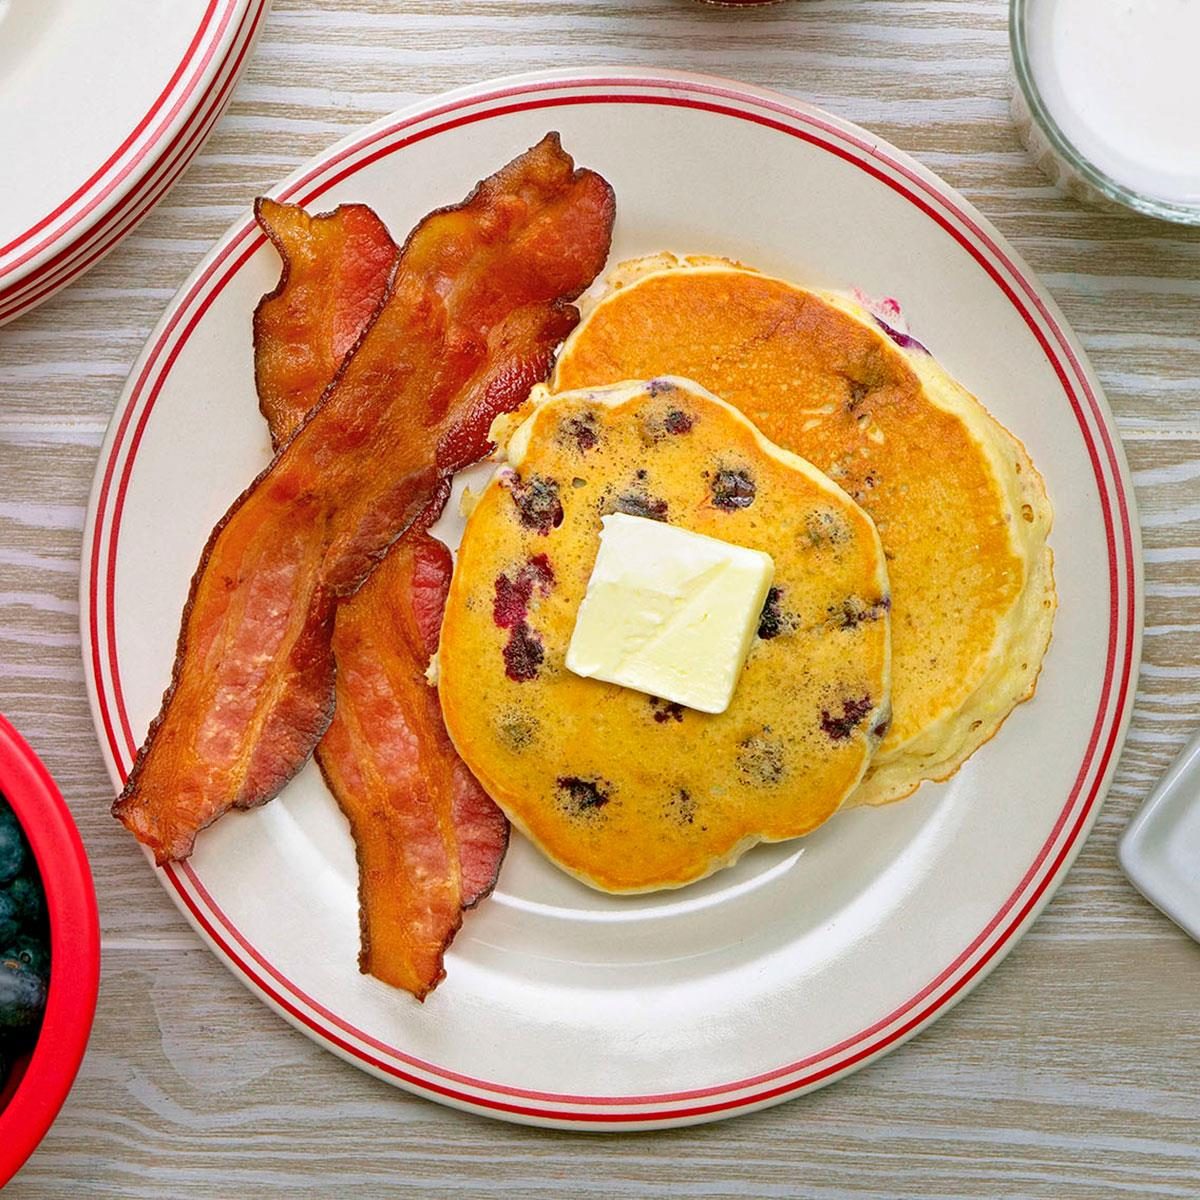 IHOP overhauls menu, adds Cinn-A-Stack pancakes and savory crepes